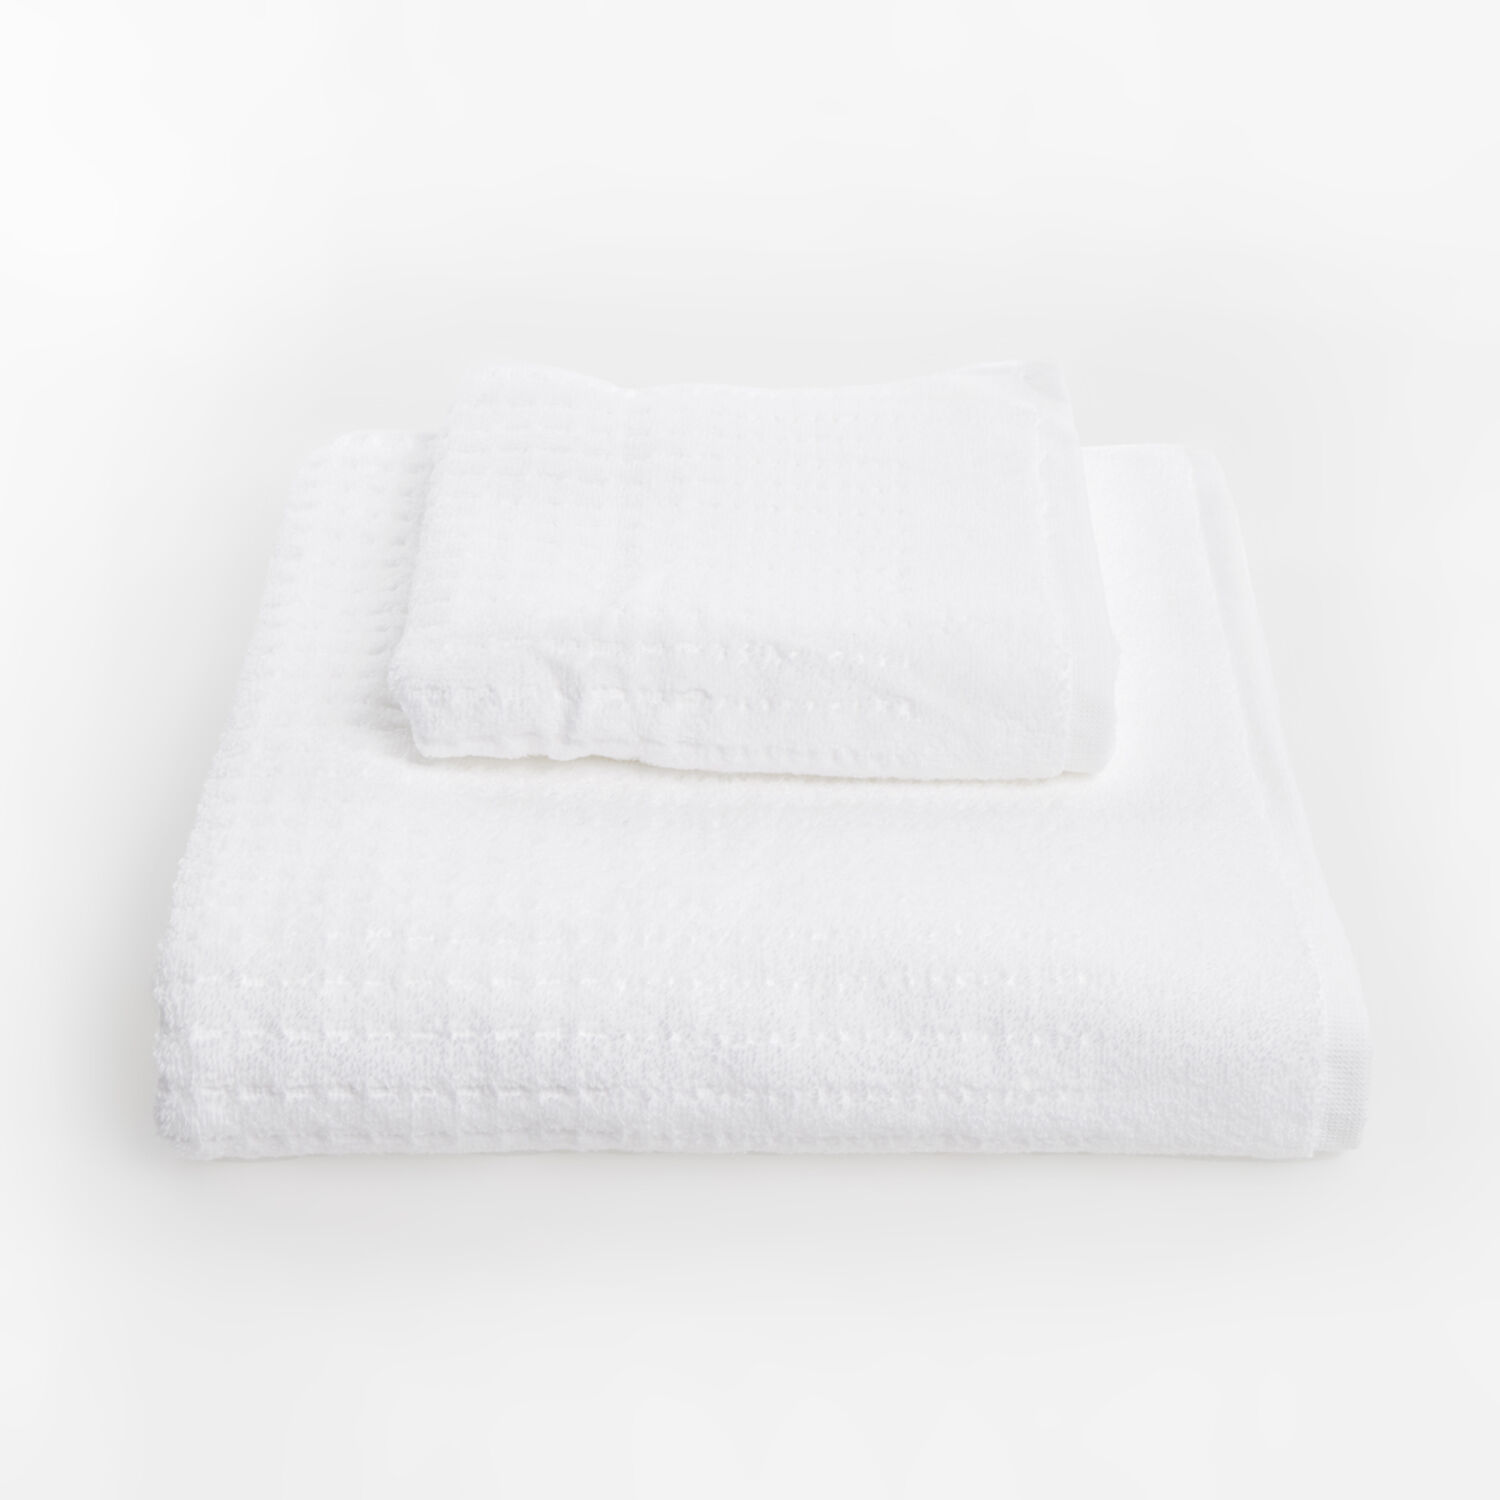 Black & White Patterned Towel 130x70cm - TK Maxx UK